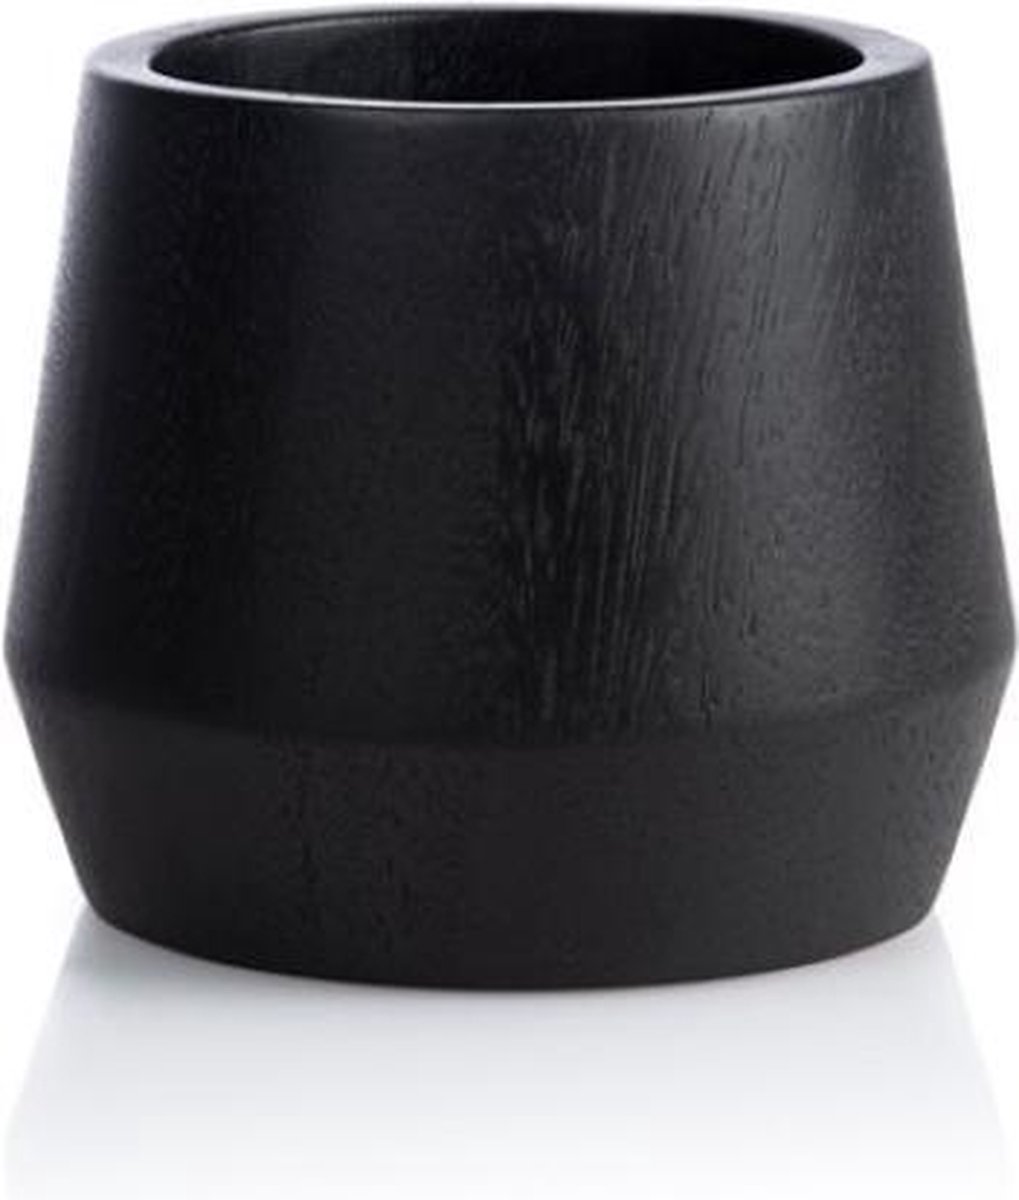 XLBoom - NERO BOWL Pot van zwart rubberhout LAAG - Ø13.5cm x h11.5cm